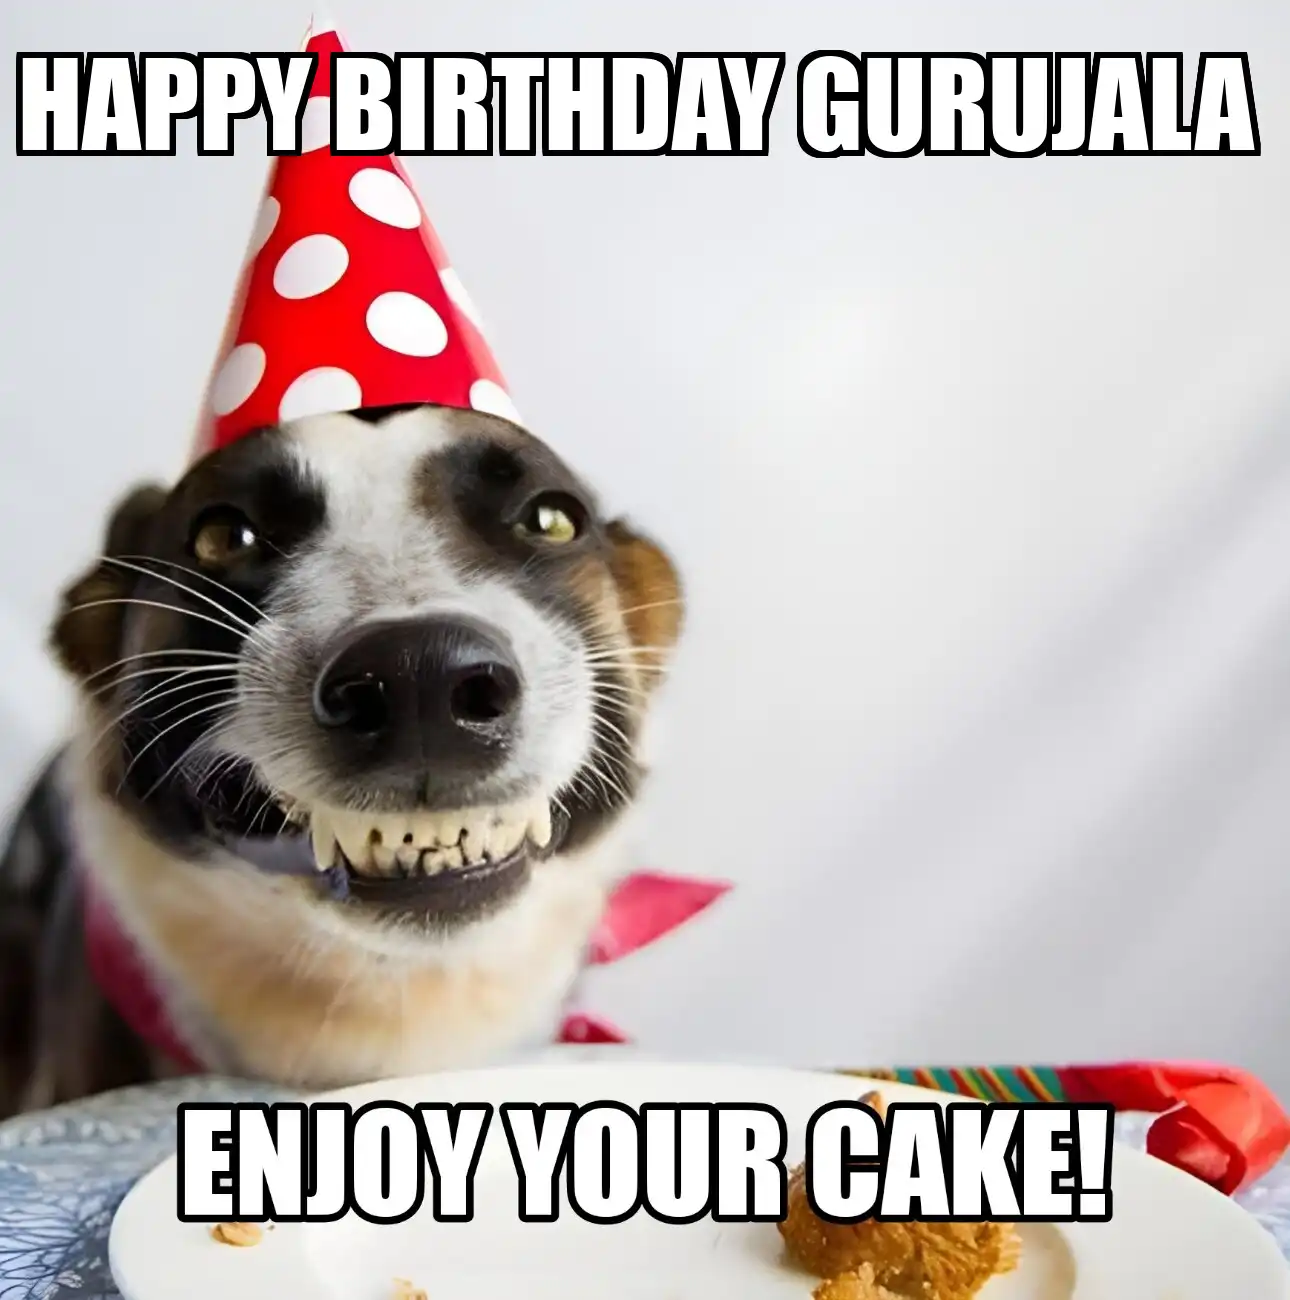 Happy Birthday Gurujala Enjoy Your Cake Dog Meme